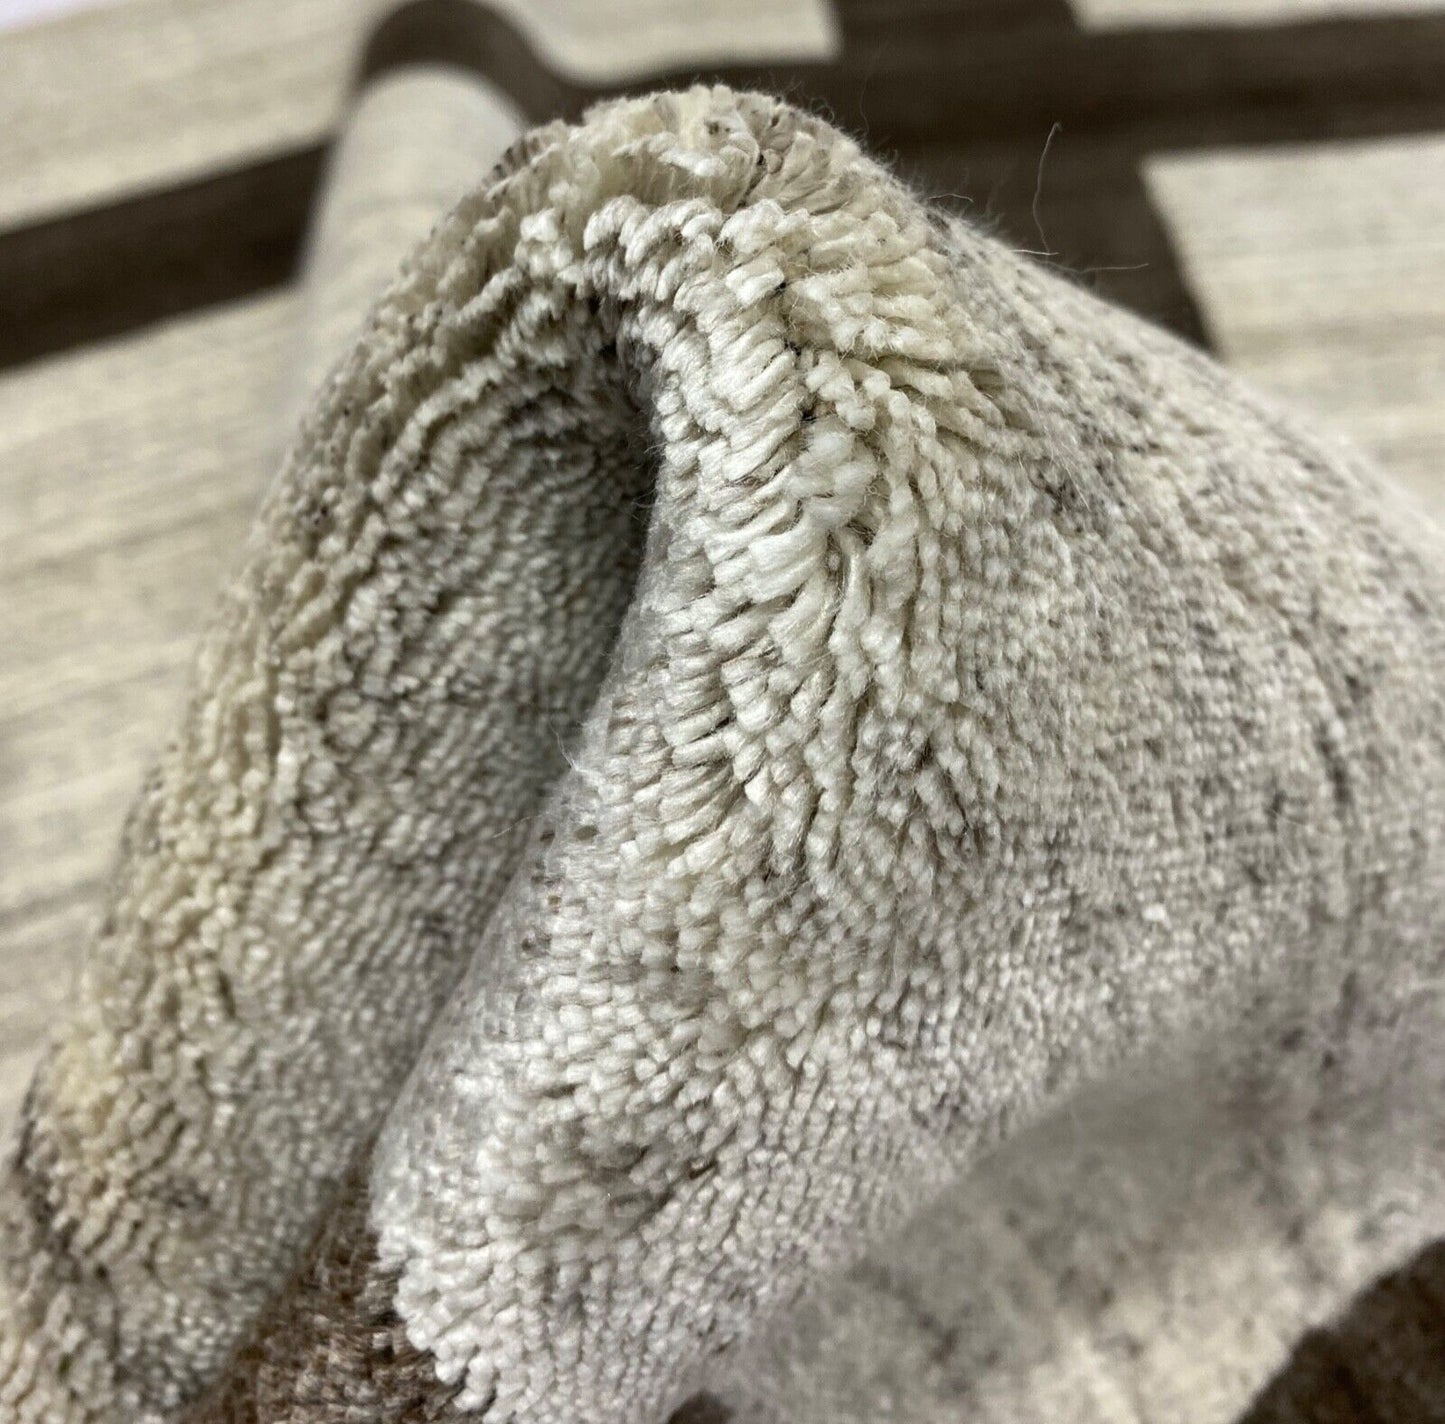 Teppich 100% Wolle Grau Beige Gabbeh lori Handgewebt 120x180 cm dp Garn S151